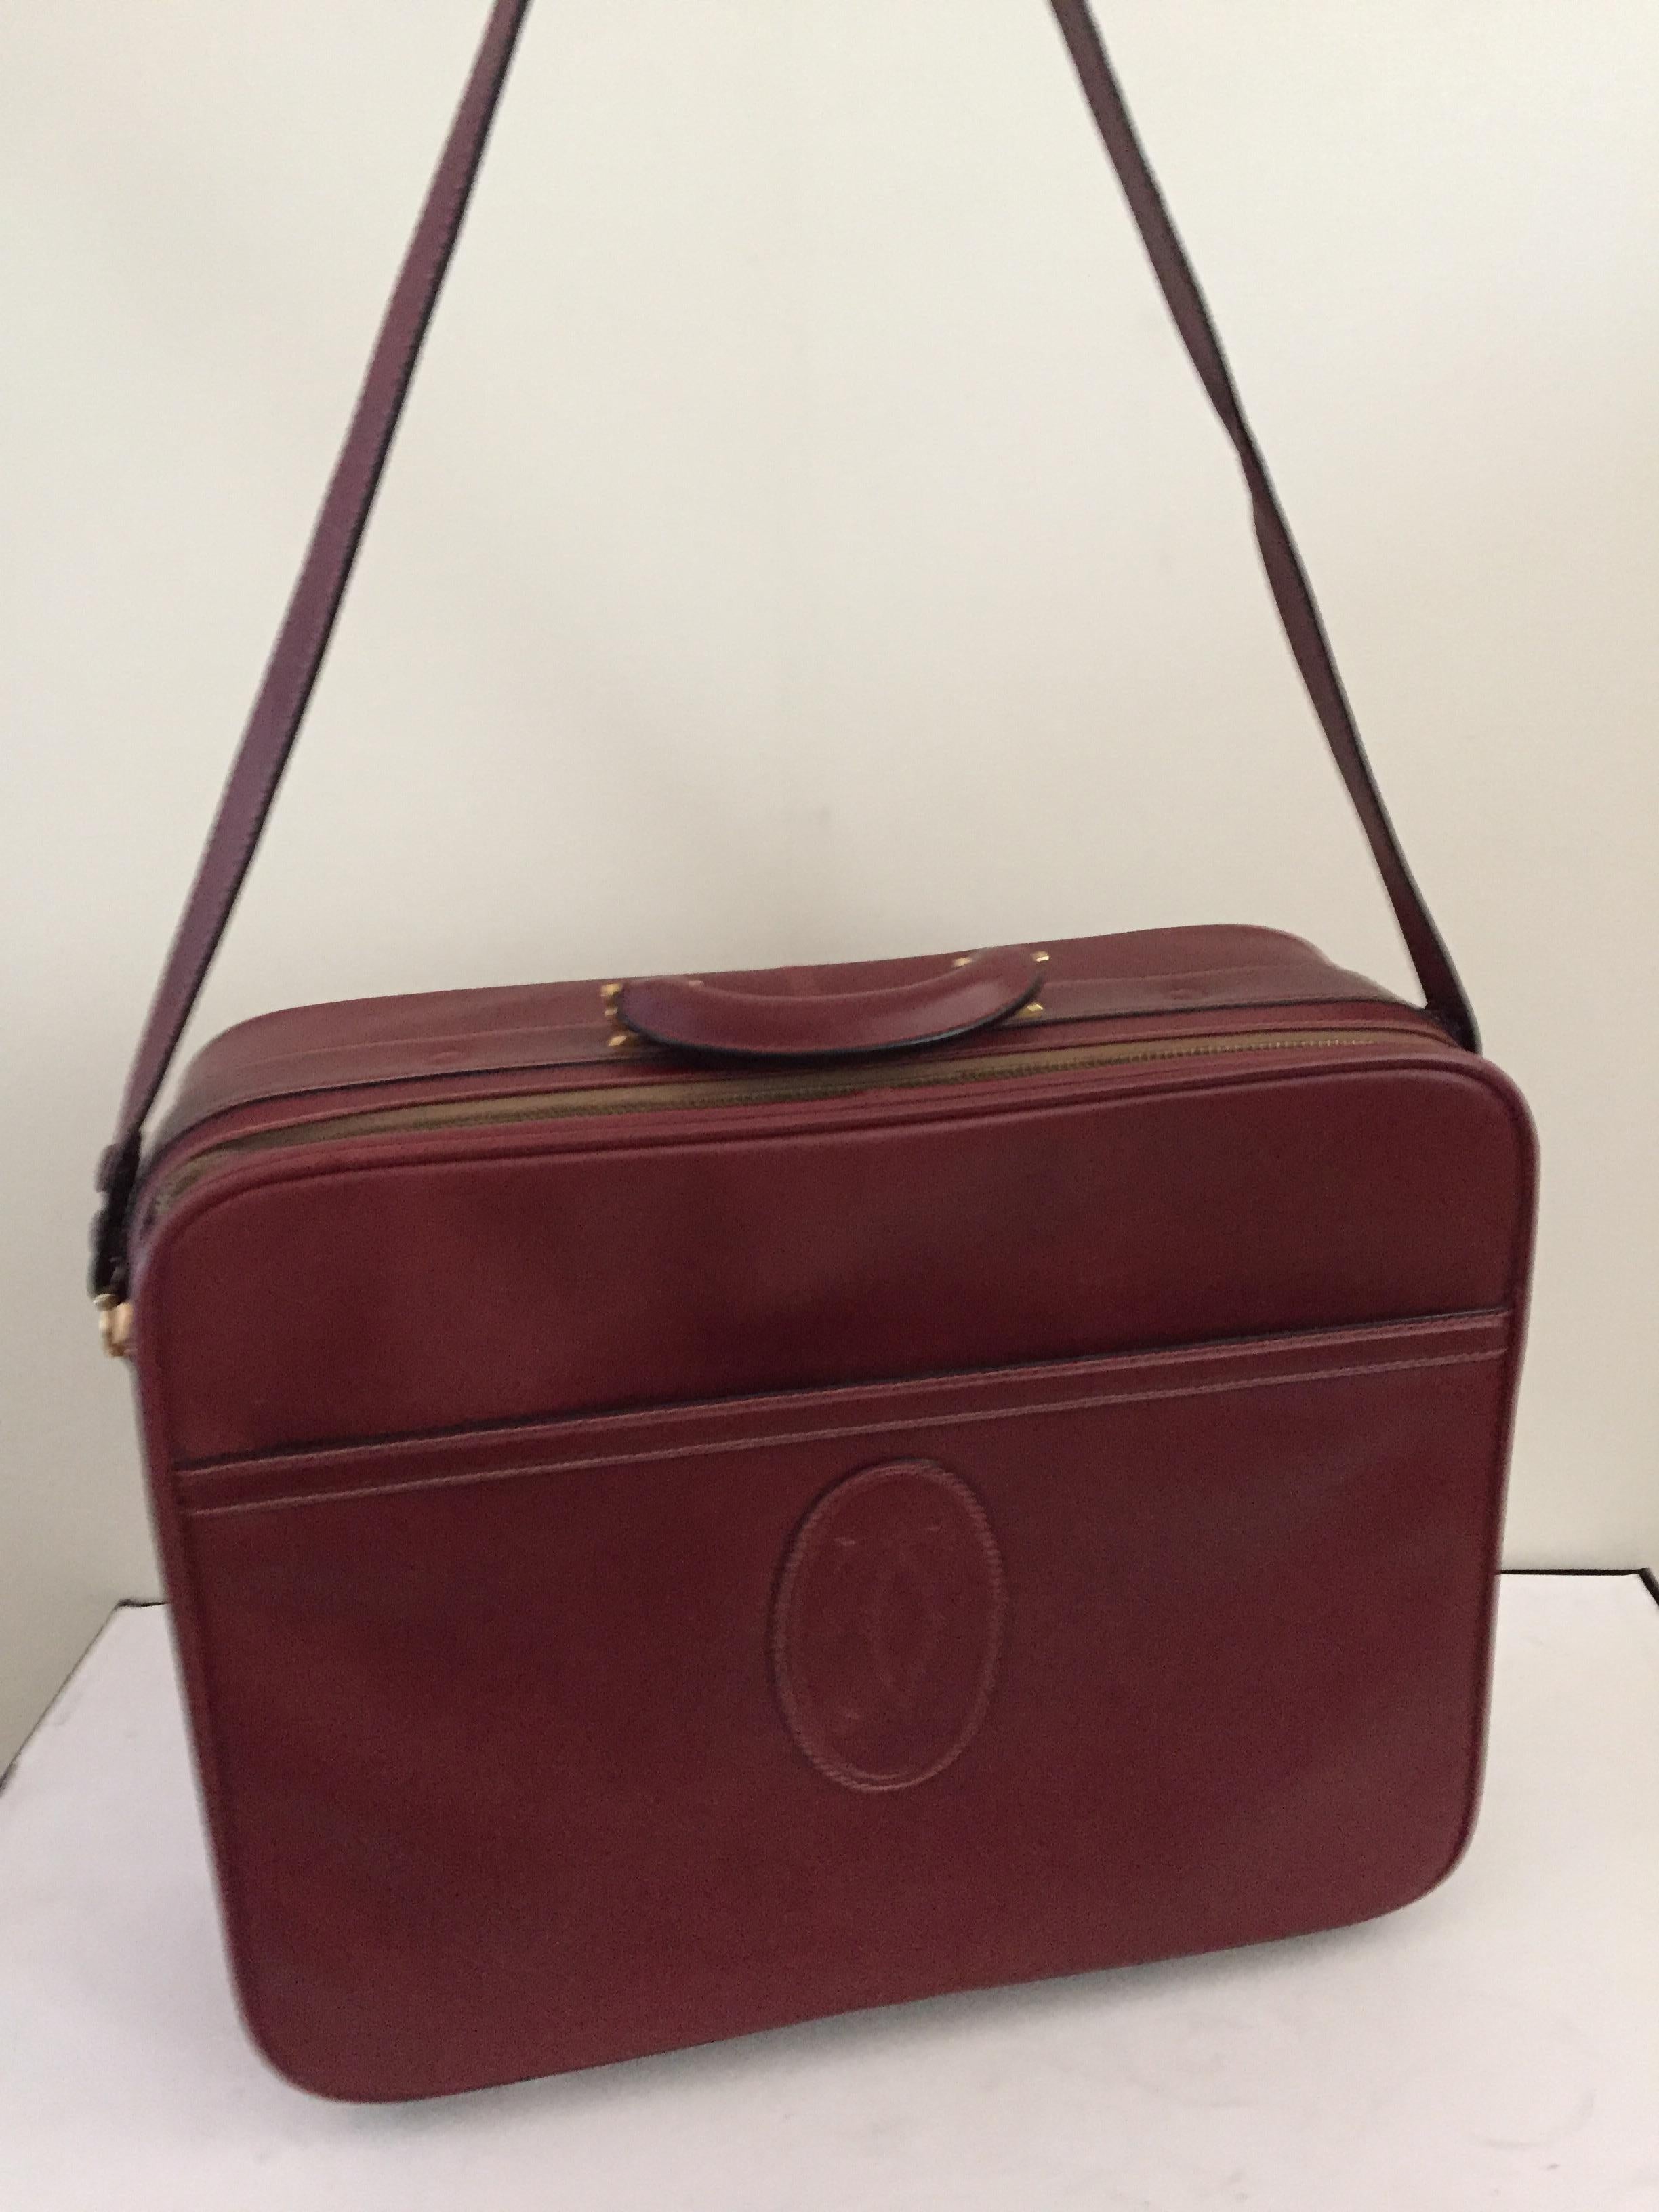 Gilt Cartier Les Must de Cartier Burgundy Leather Travel Overnight Suitcase / Luggage